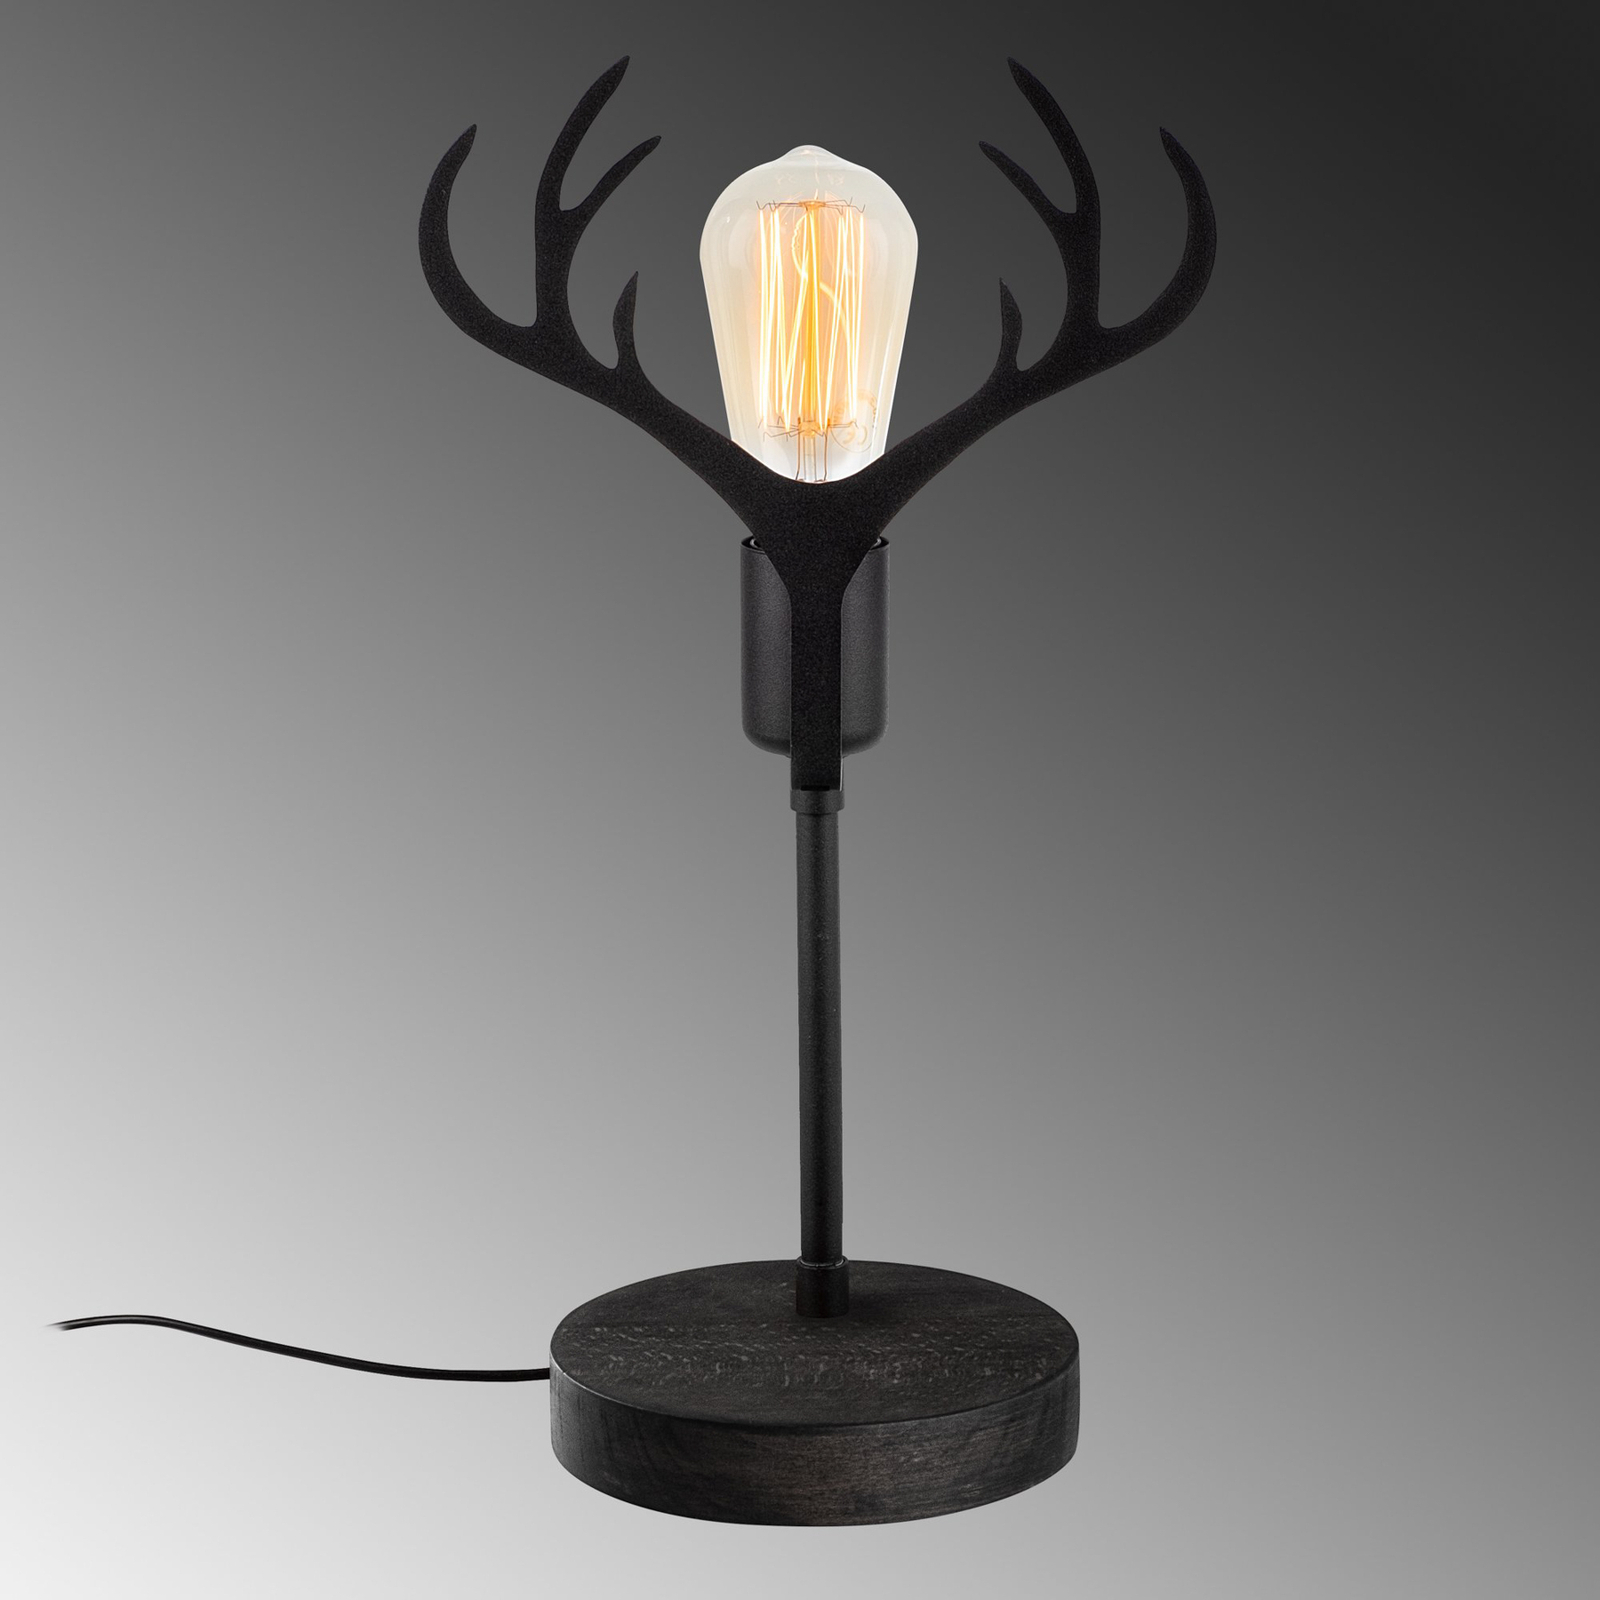 Stolna lampa GMN-000011 crni jelenji rogovi